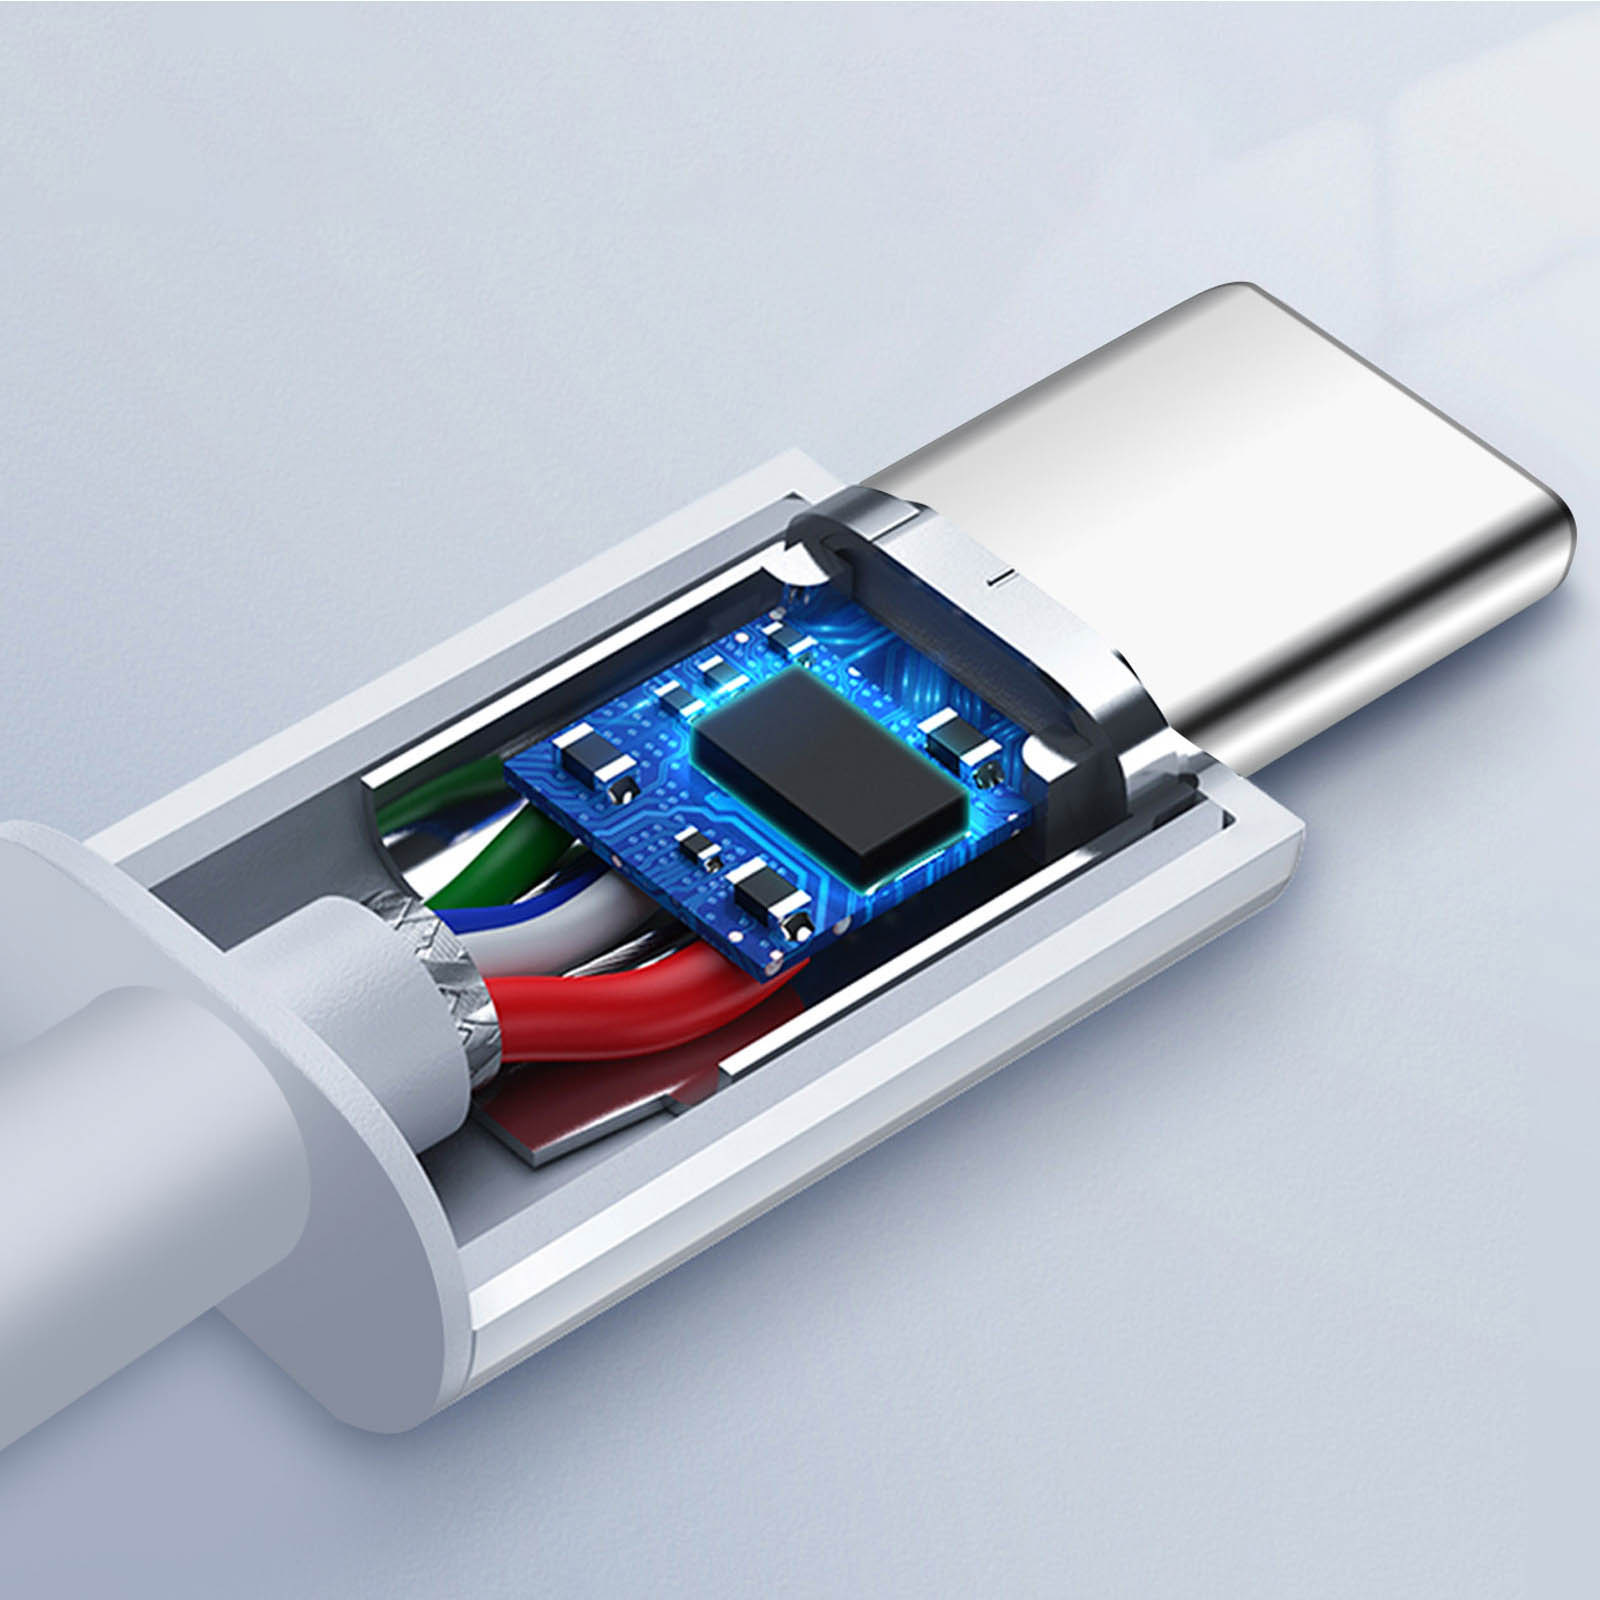 Adaptateur USB-C vers prise jack (3,5mm) d'origine Apple